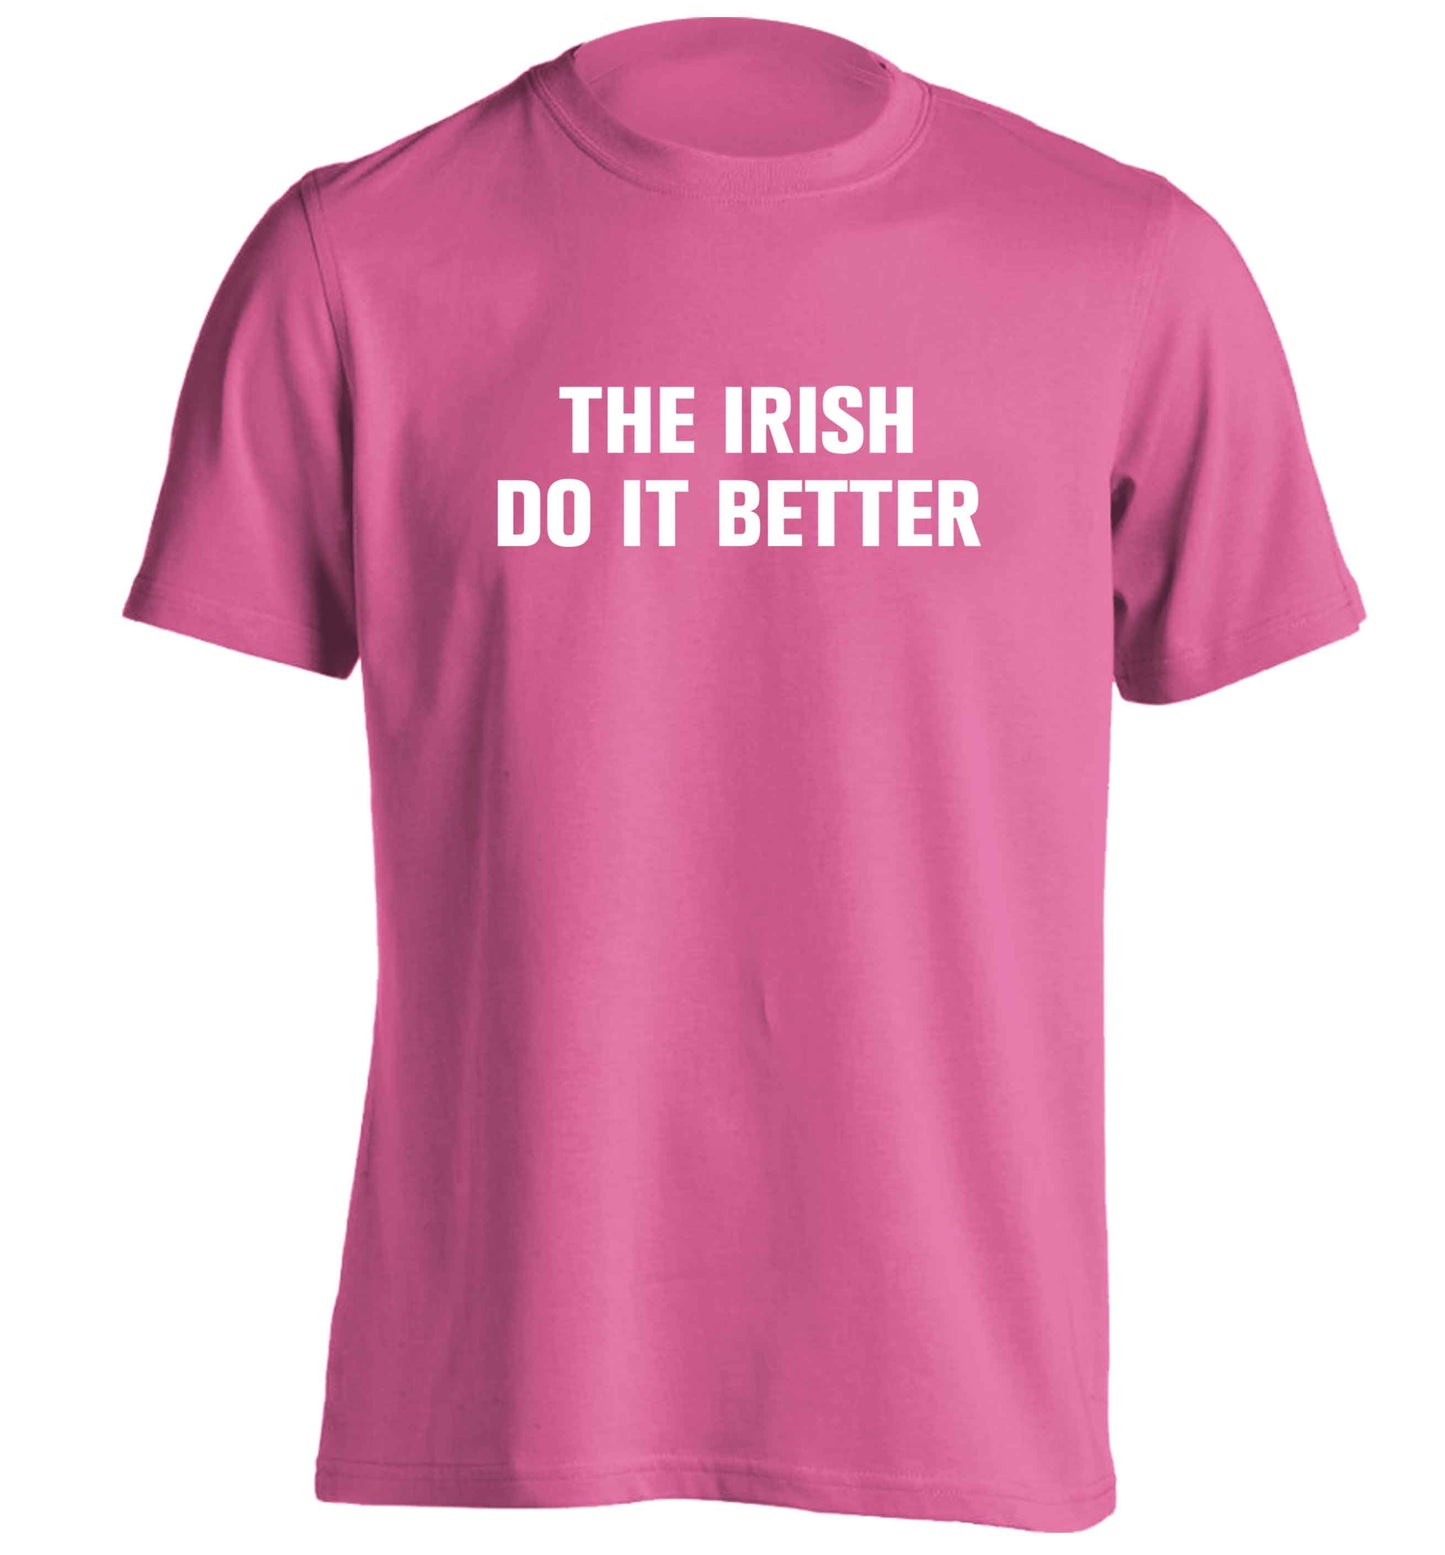 The Irish do it better adults unisex pink Tshirt 2XL